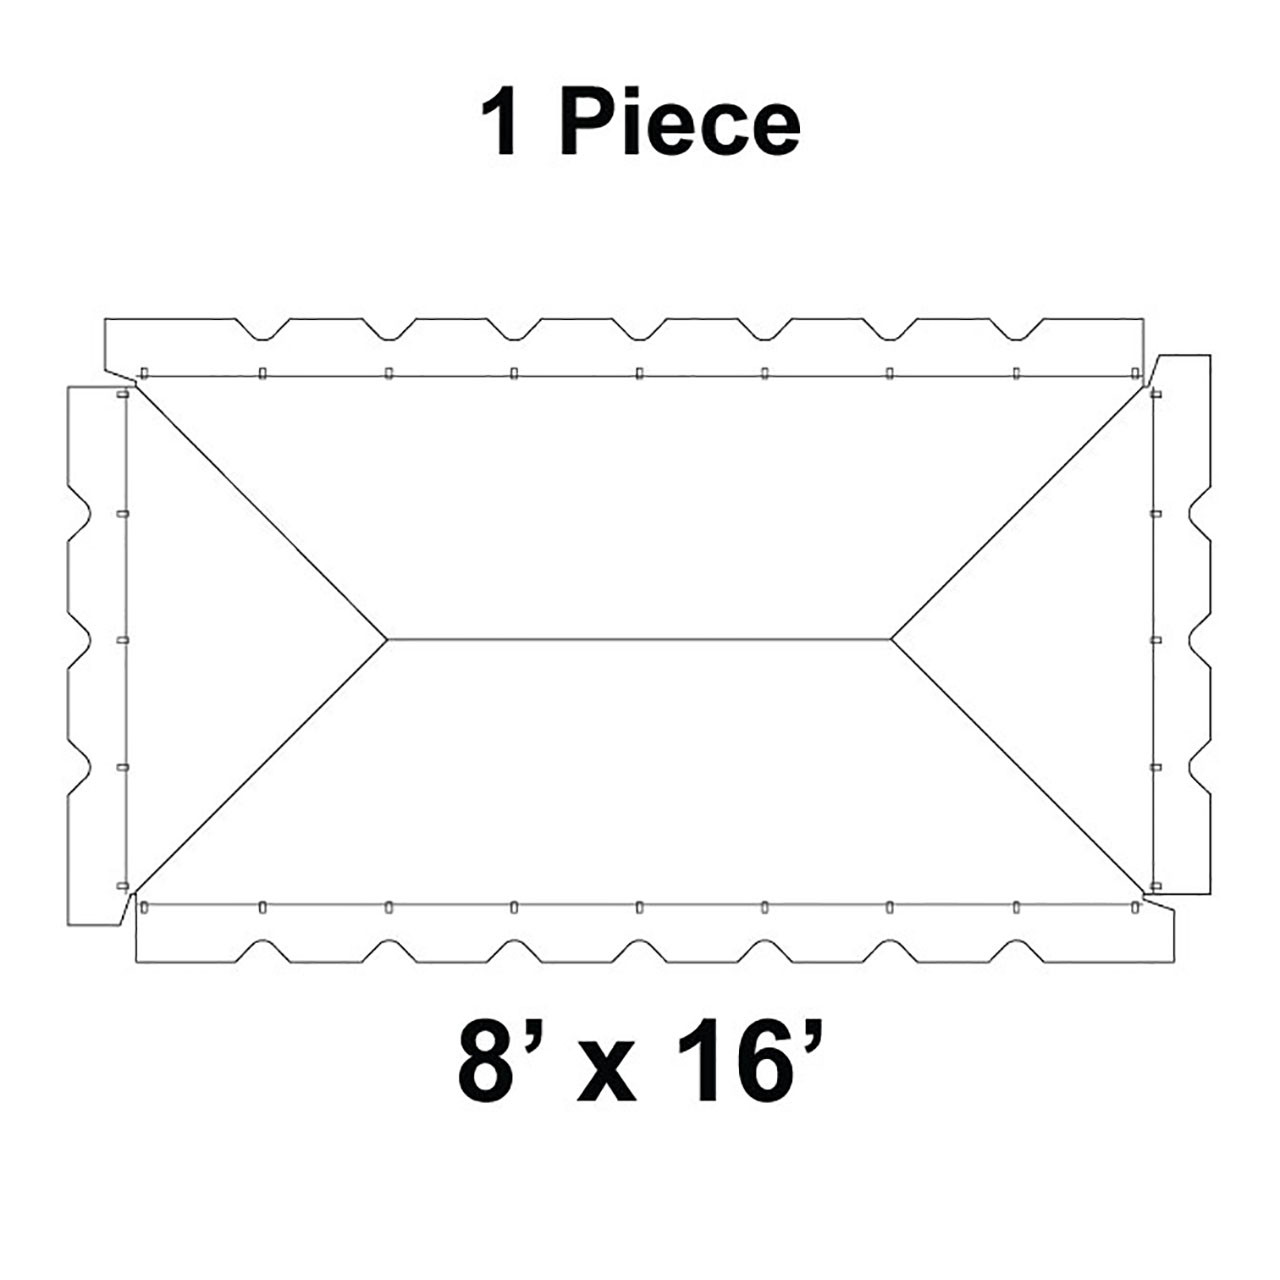 8' x 16' Classic Frame Tent, 1 Piece, 16 oz. Ratchet Top Replacement